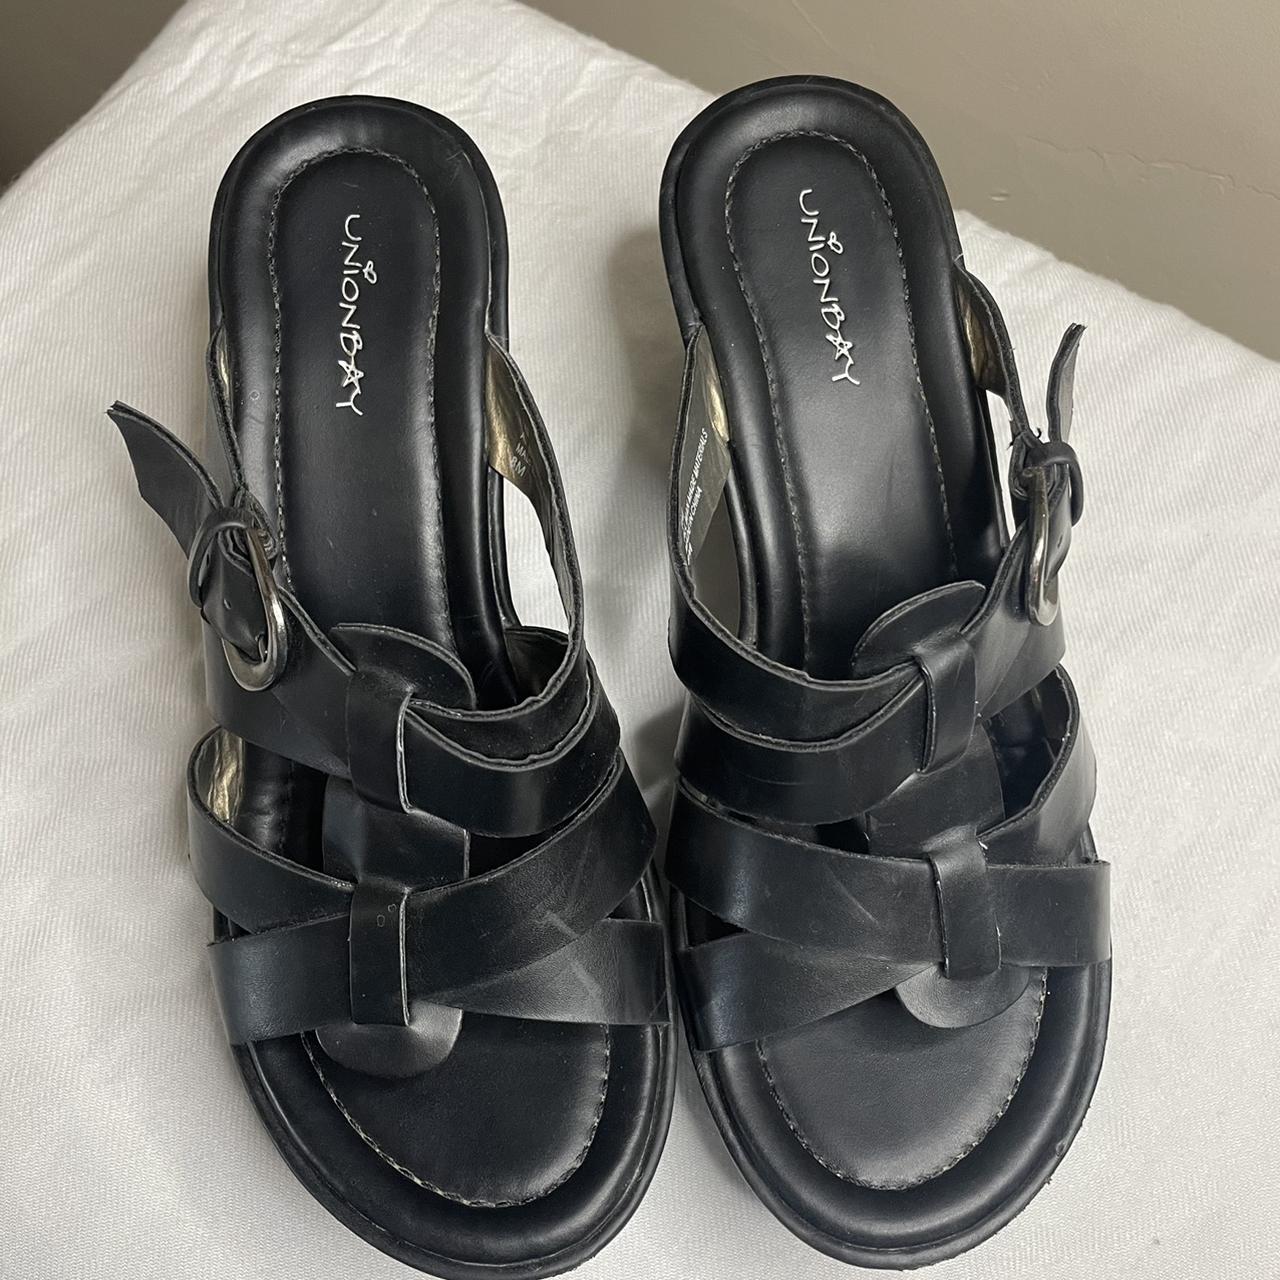 Black platform sandals by union bay, size women’s 8,... - Depop